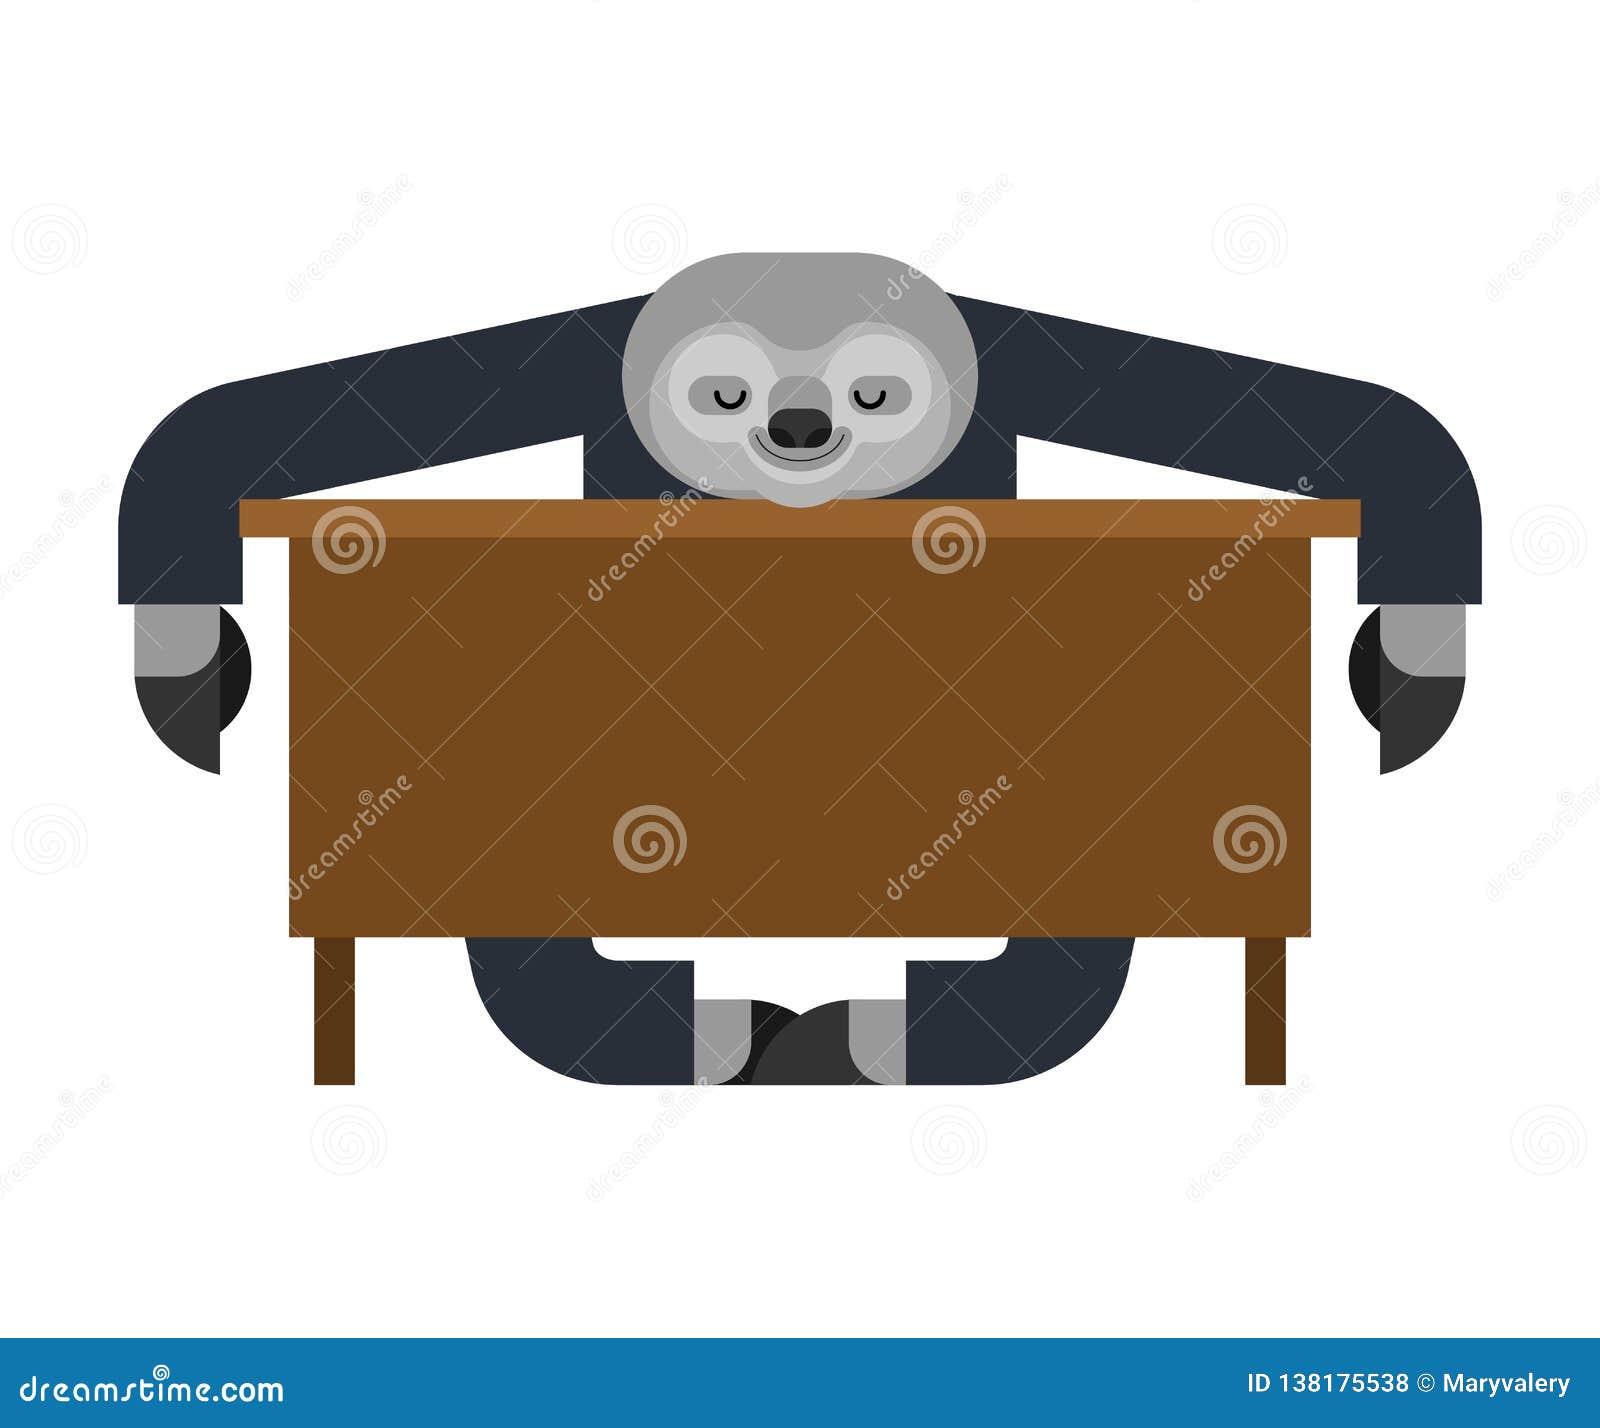 Sloth Sleeping At Work Lazybones At Table Animal Cartoon